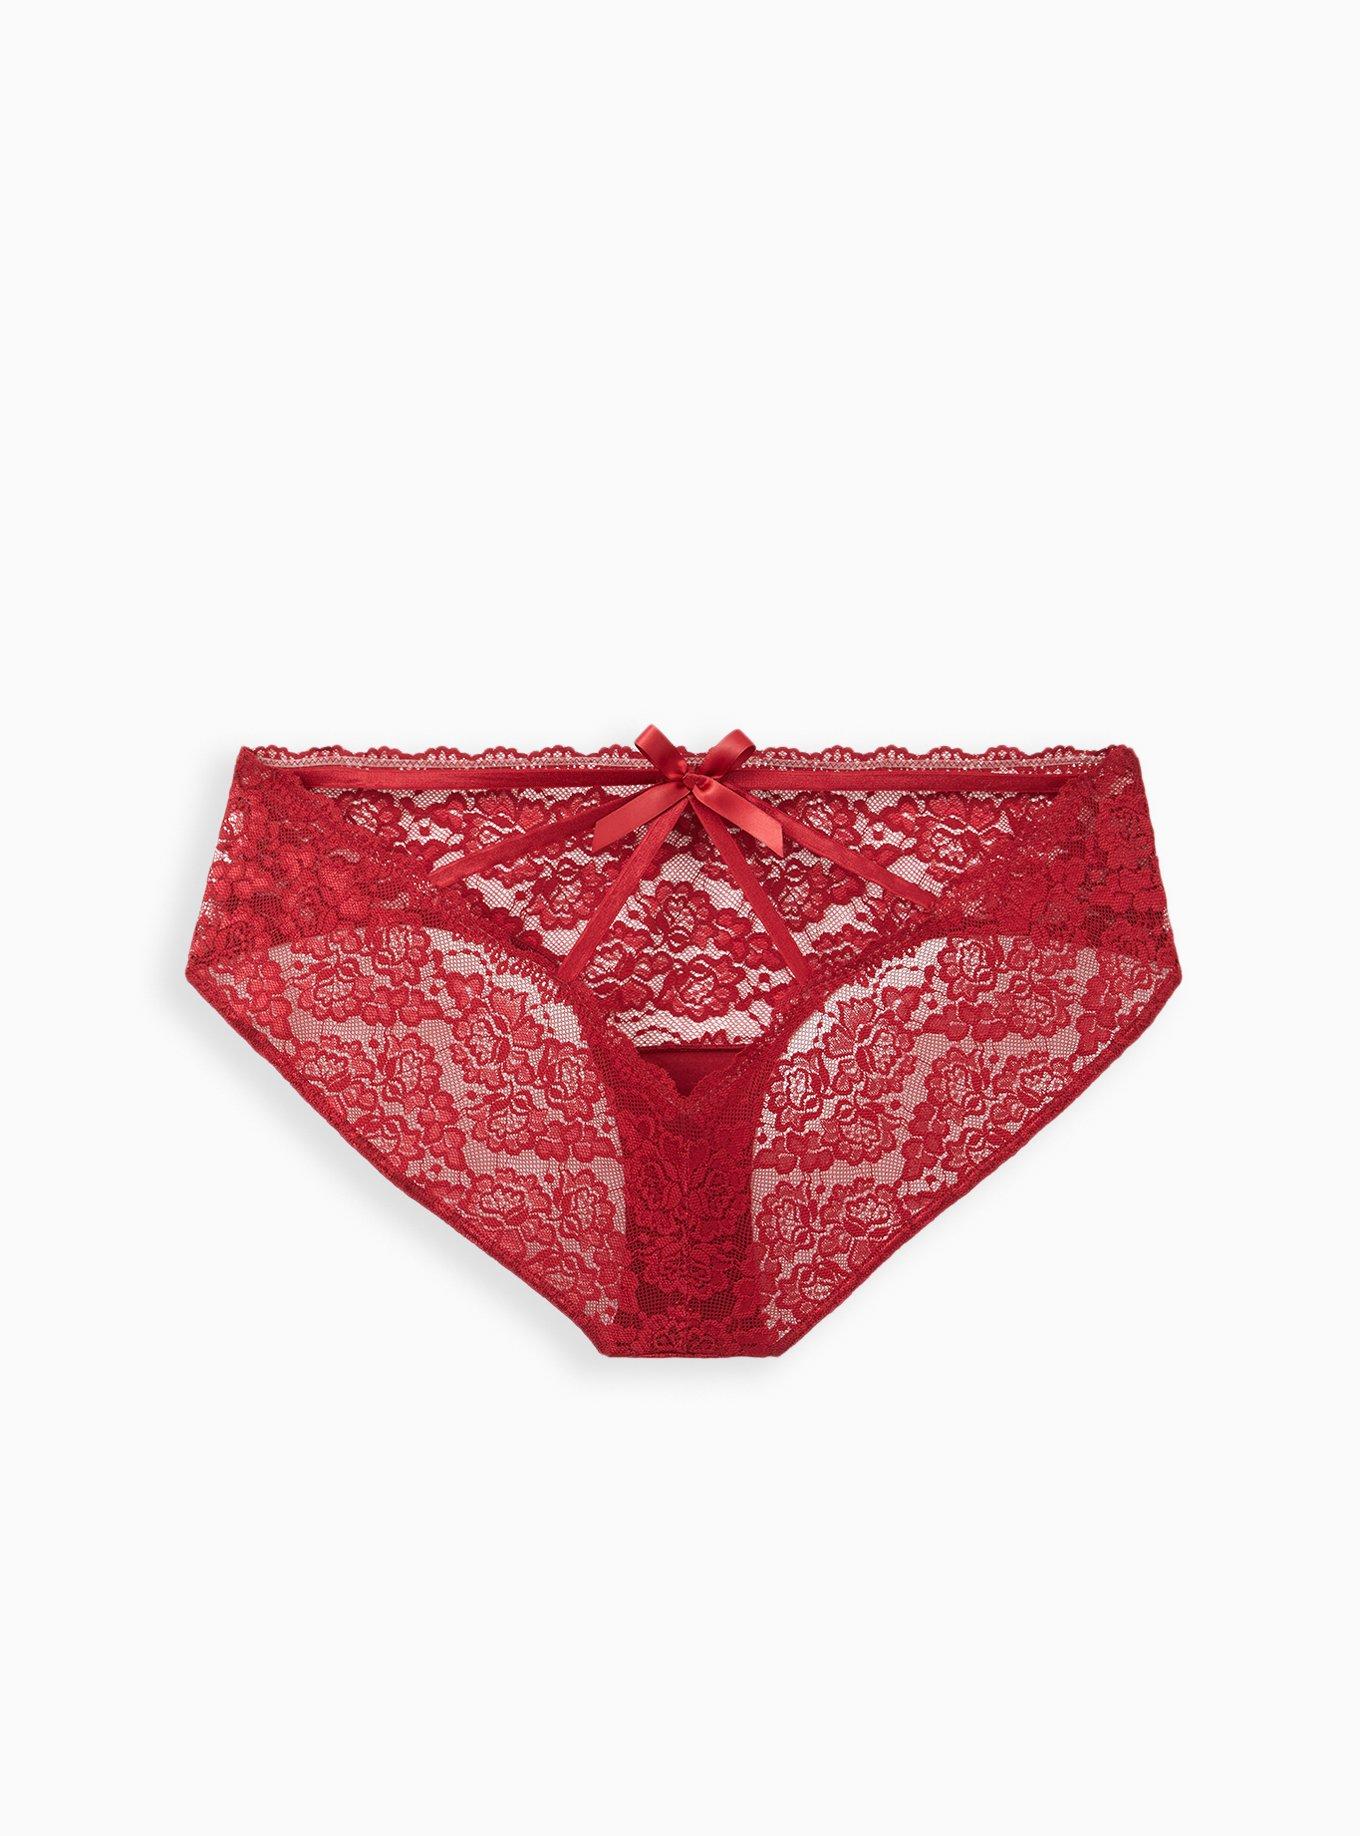 Couple Matching Set: Plain Boxer Briefs + Bow Lace Bikini Panties